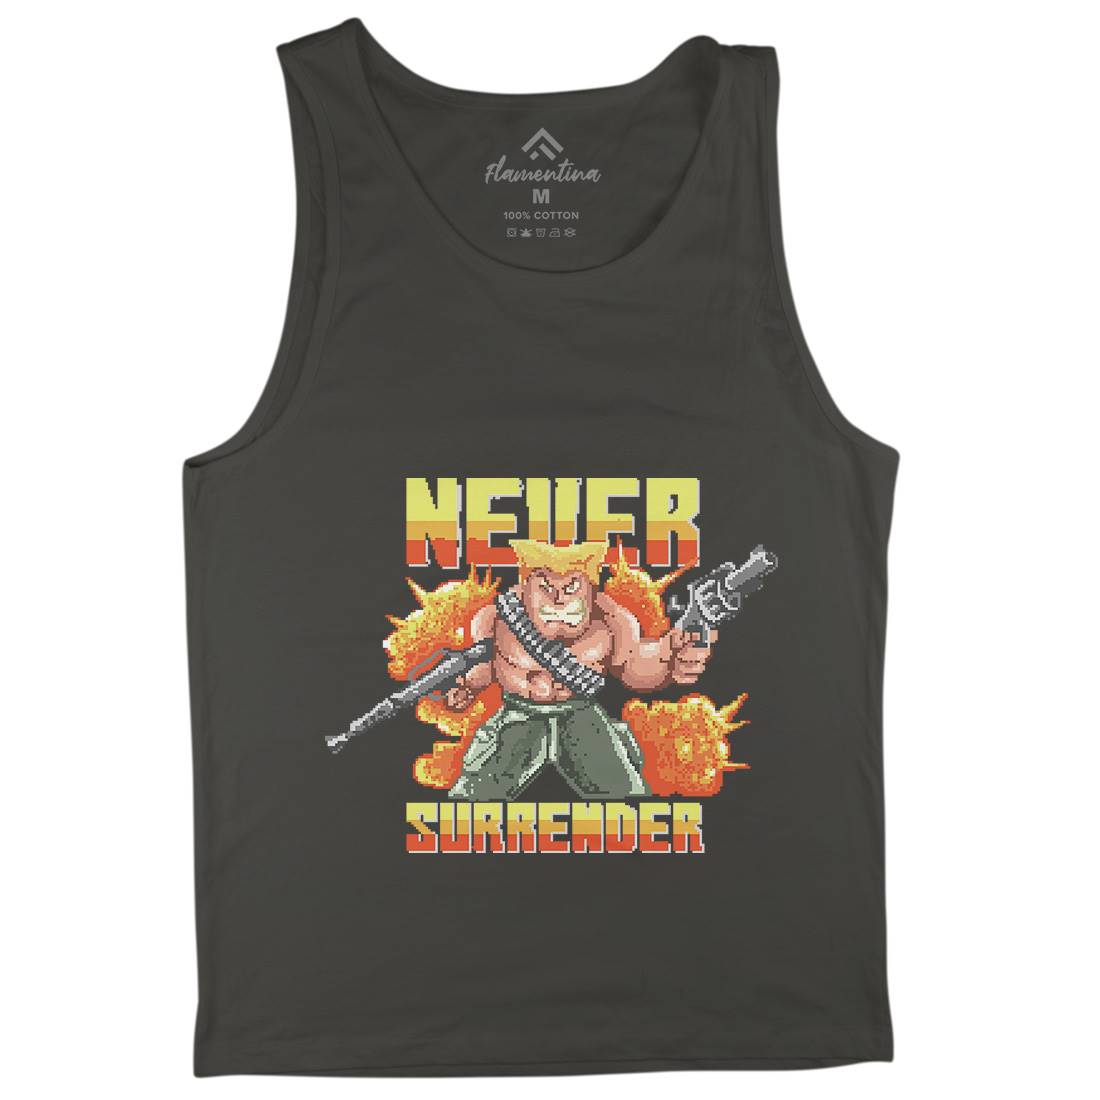 Never Surrender Mens Tank Top Vest Army B939